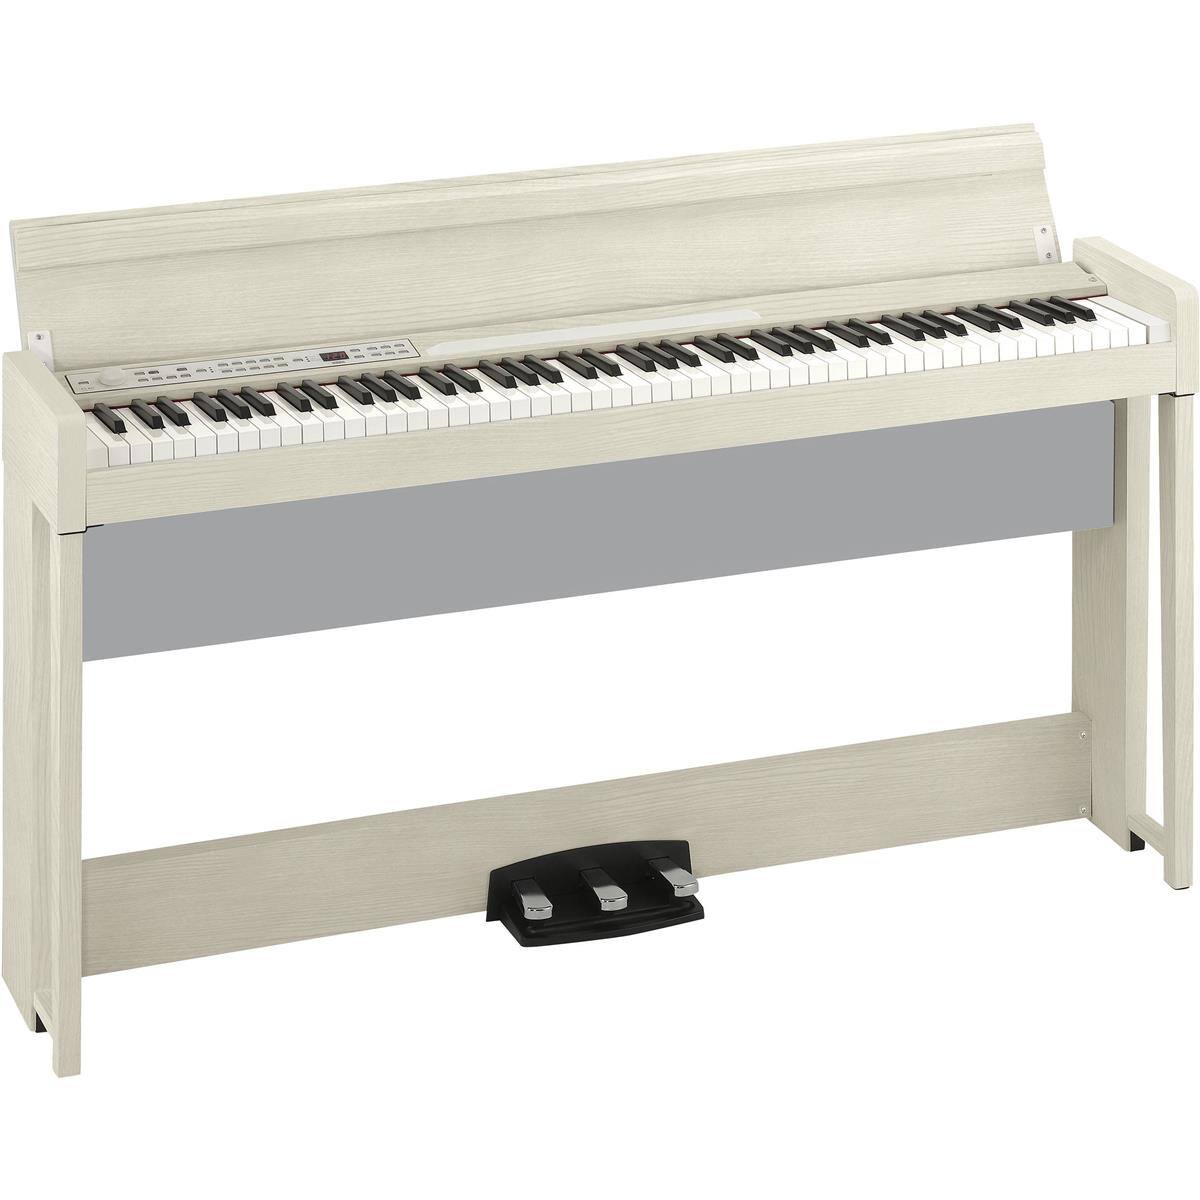 Korg C1 Air Bluetooth 88 Key Digital Piano w/ Hammer Action 3 Keyboard (White Ash) $899 + free s/h